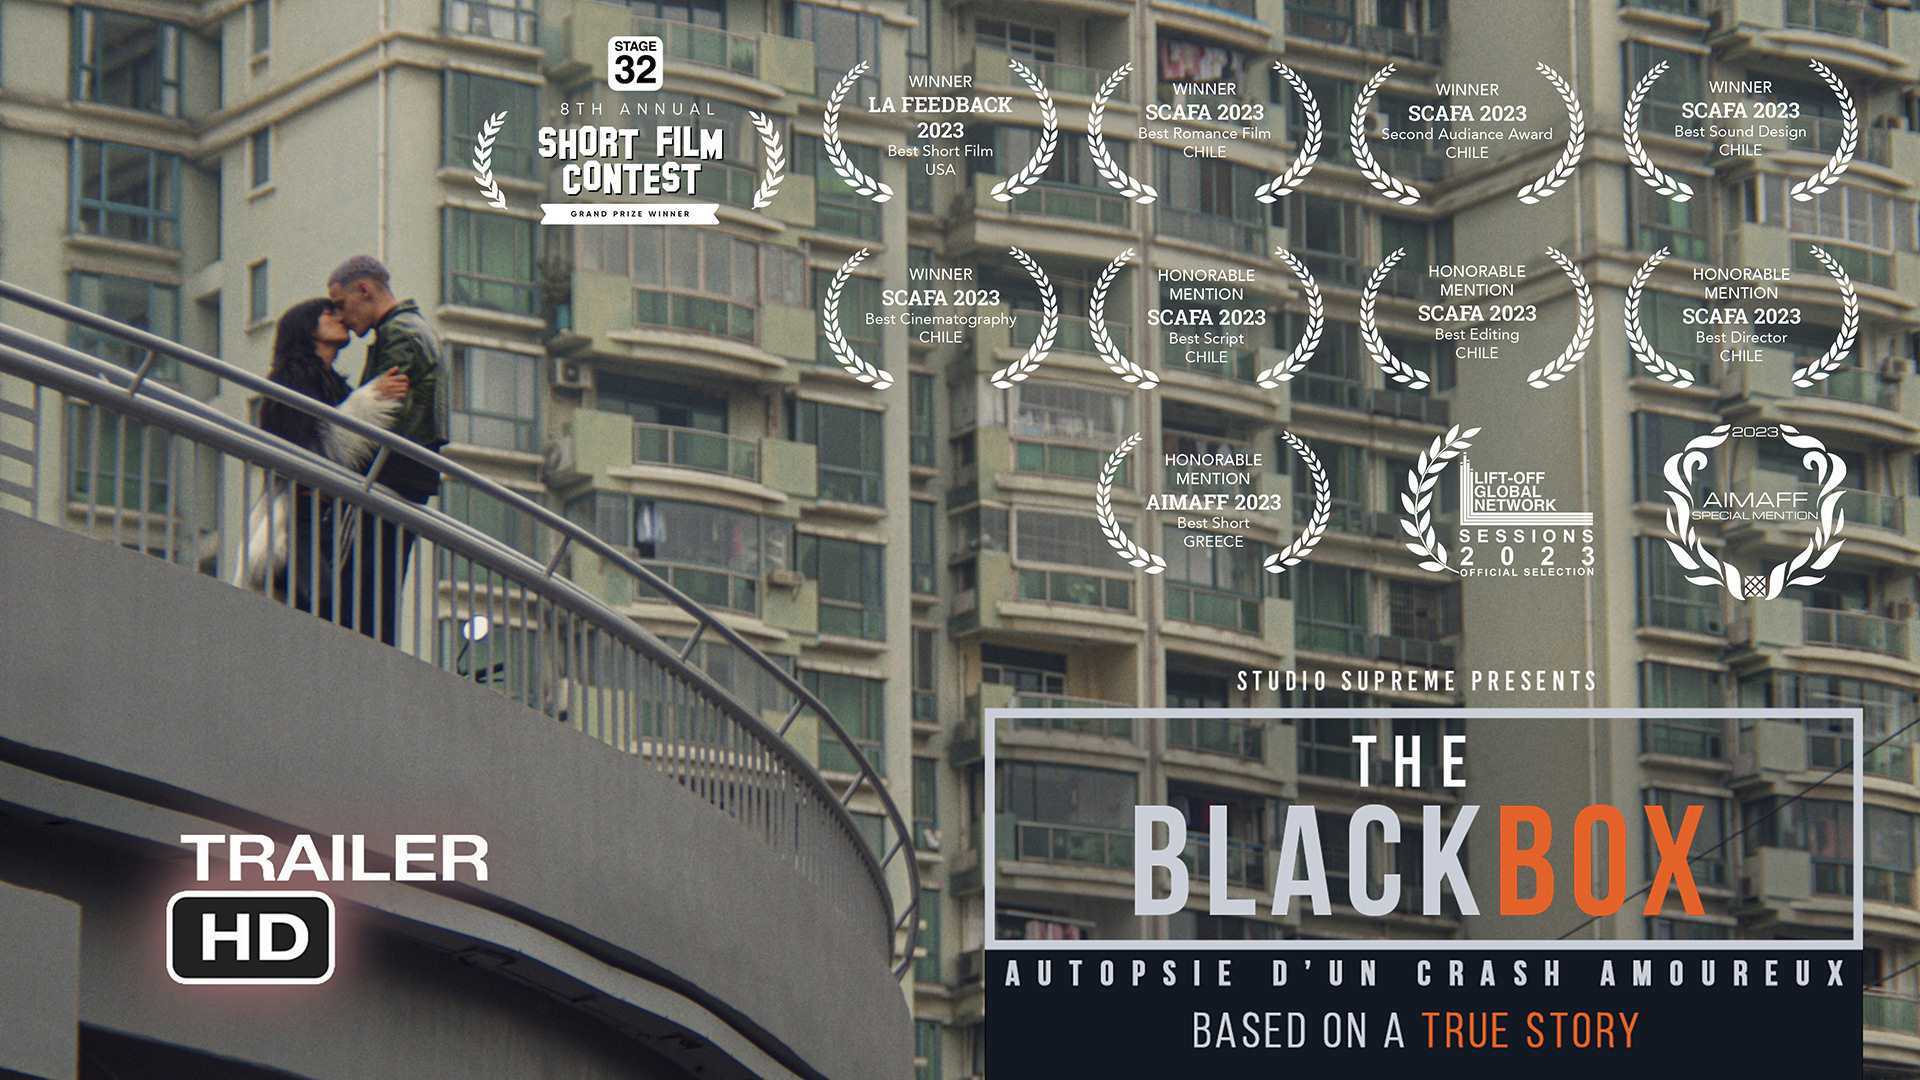 THE BLACK BOX - Movie Trailer